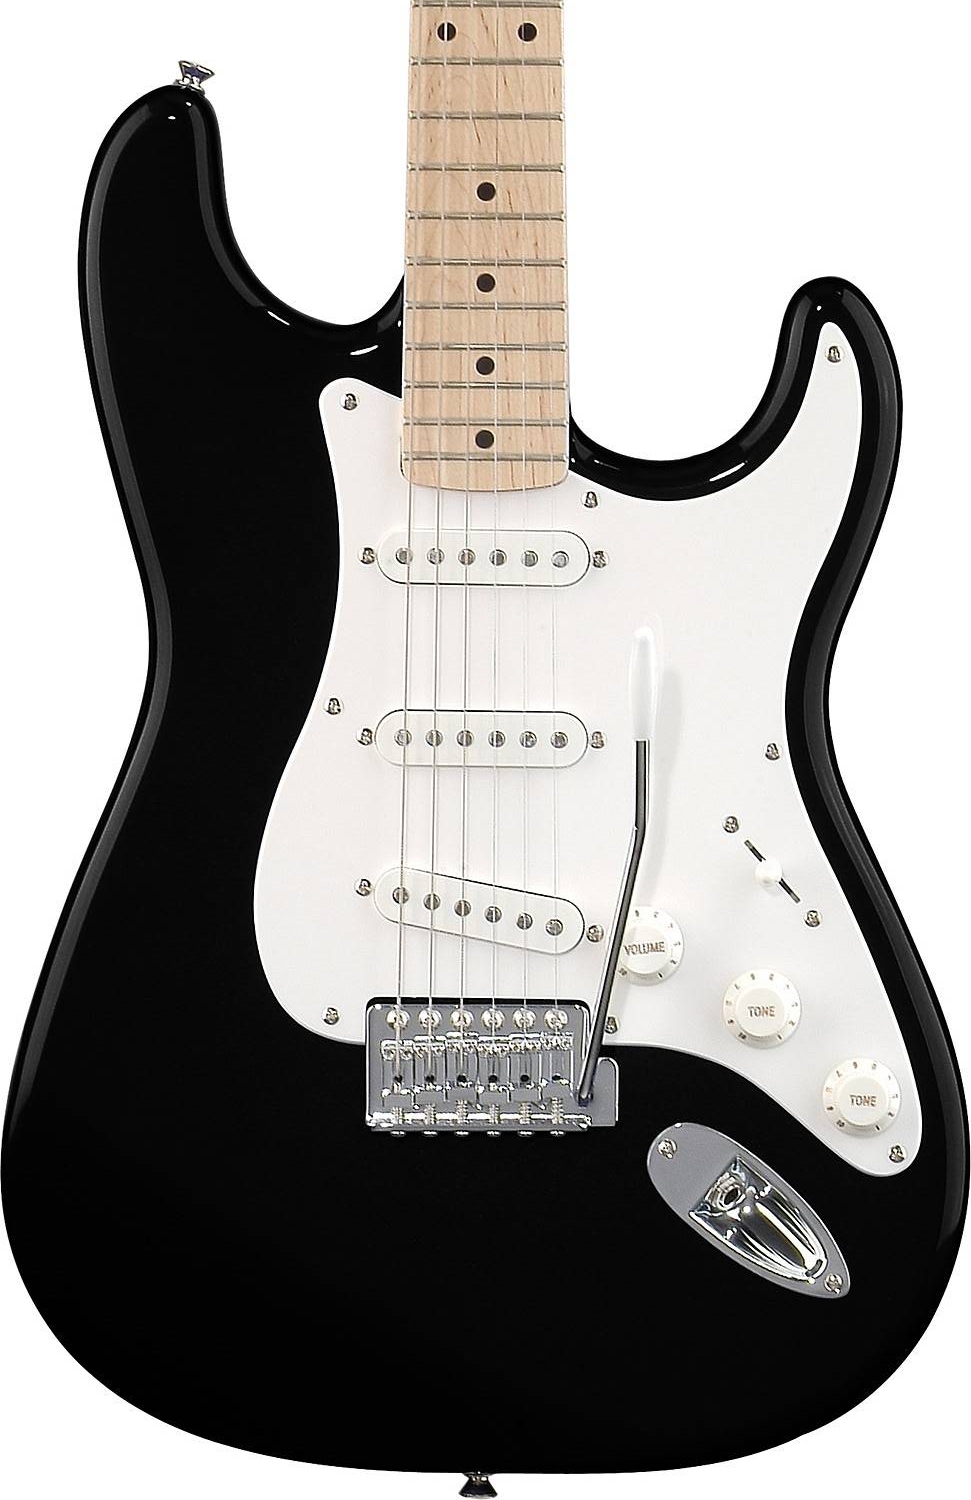 Stratocaster цена. Гитара Squier by Fender. Гитара Fender Stratocaster. Гитара Squier Strat by Fender. Fender Squier чëрная электрогитара.